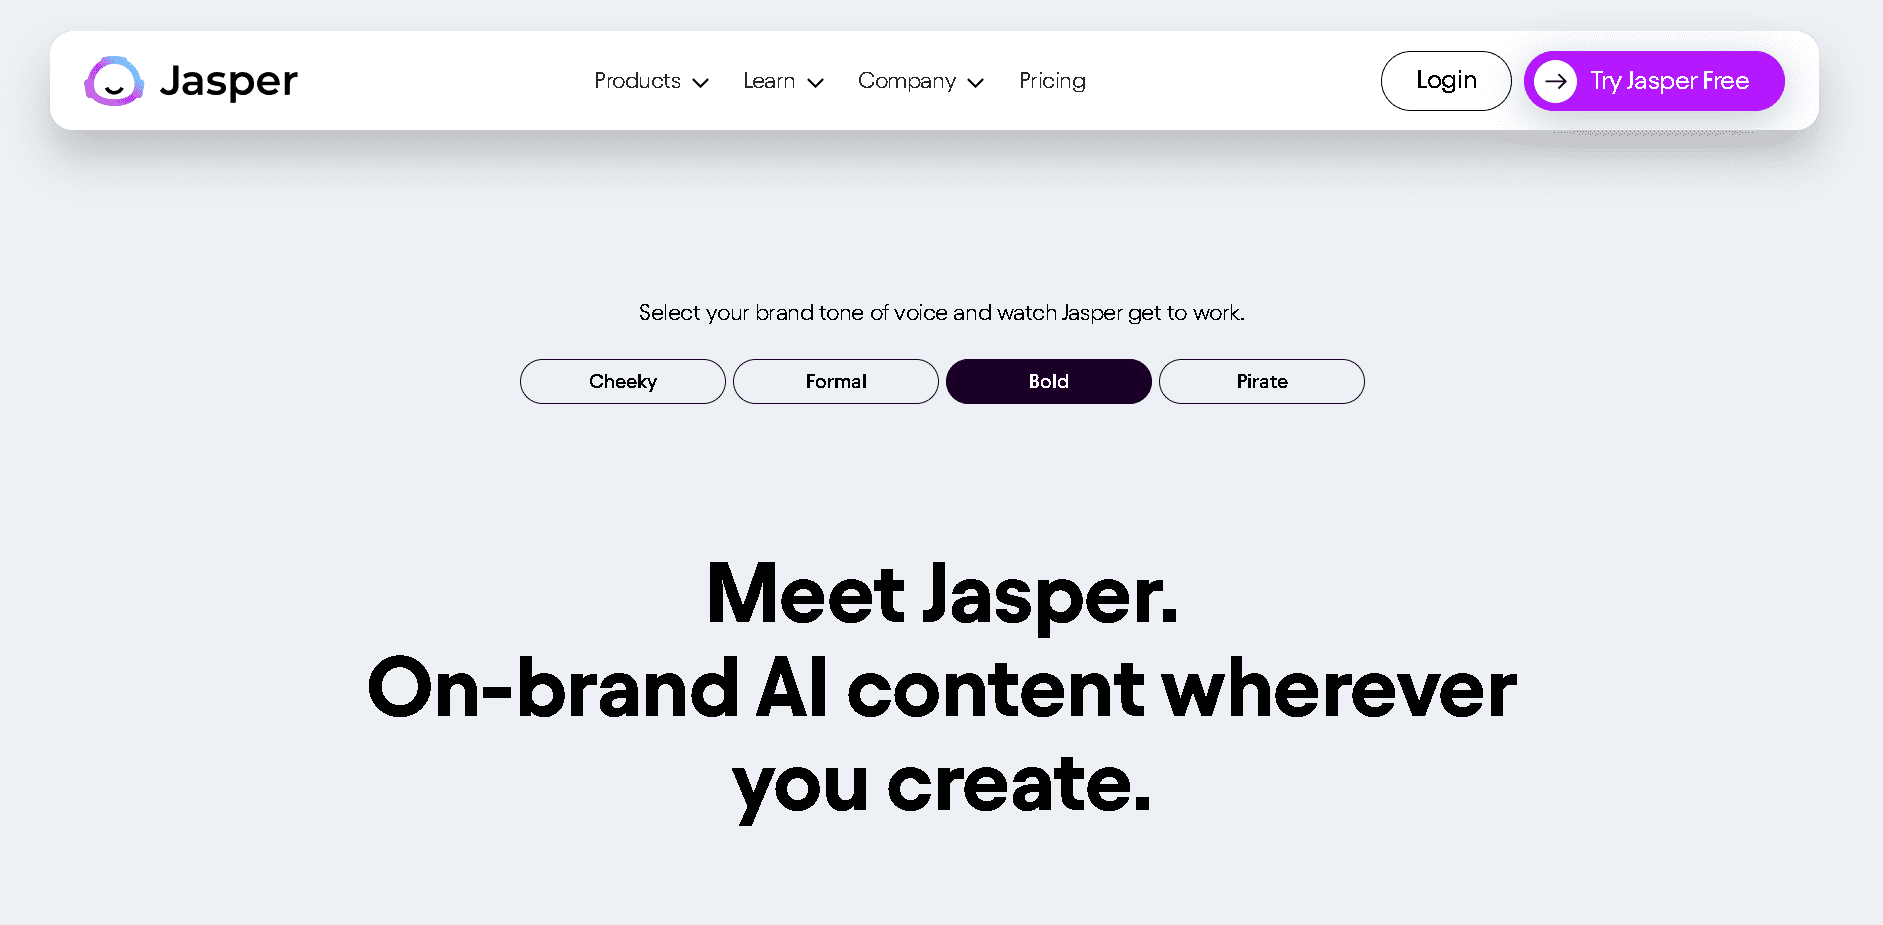 Jasper AI paraphrasing tool and app